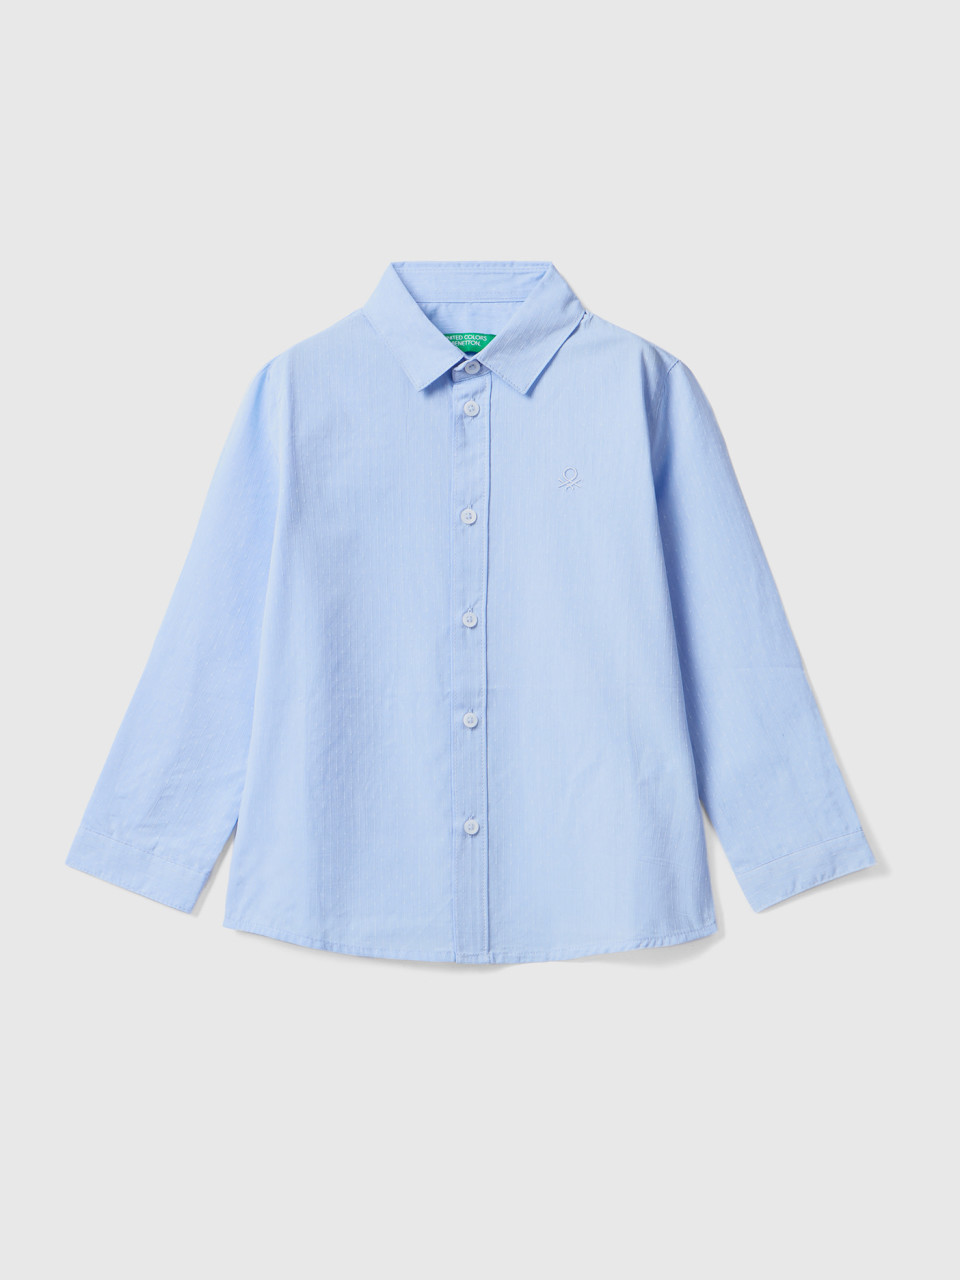 Benetton, Classic Shirt In Pure Cotton, Sky Blue, Kids